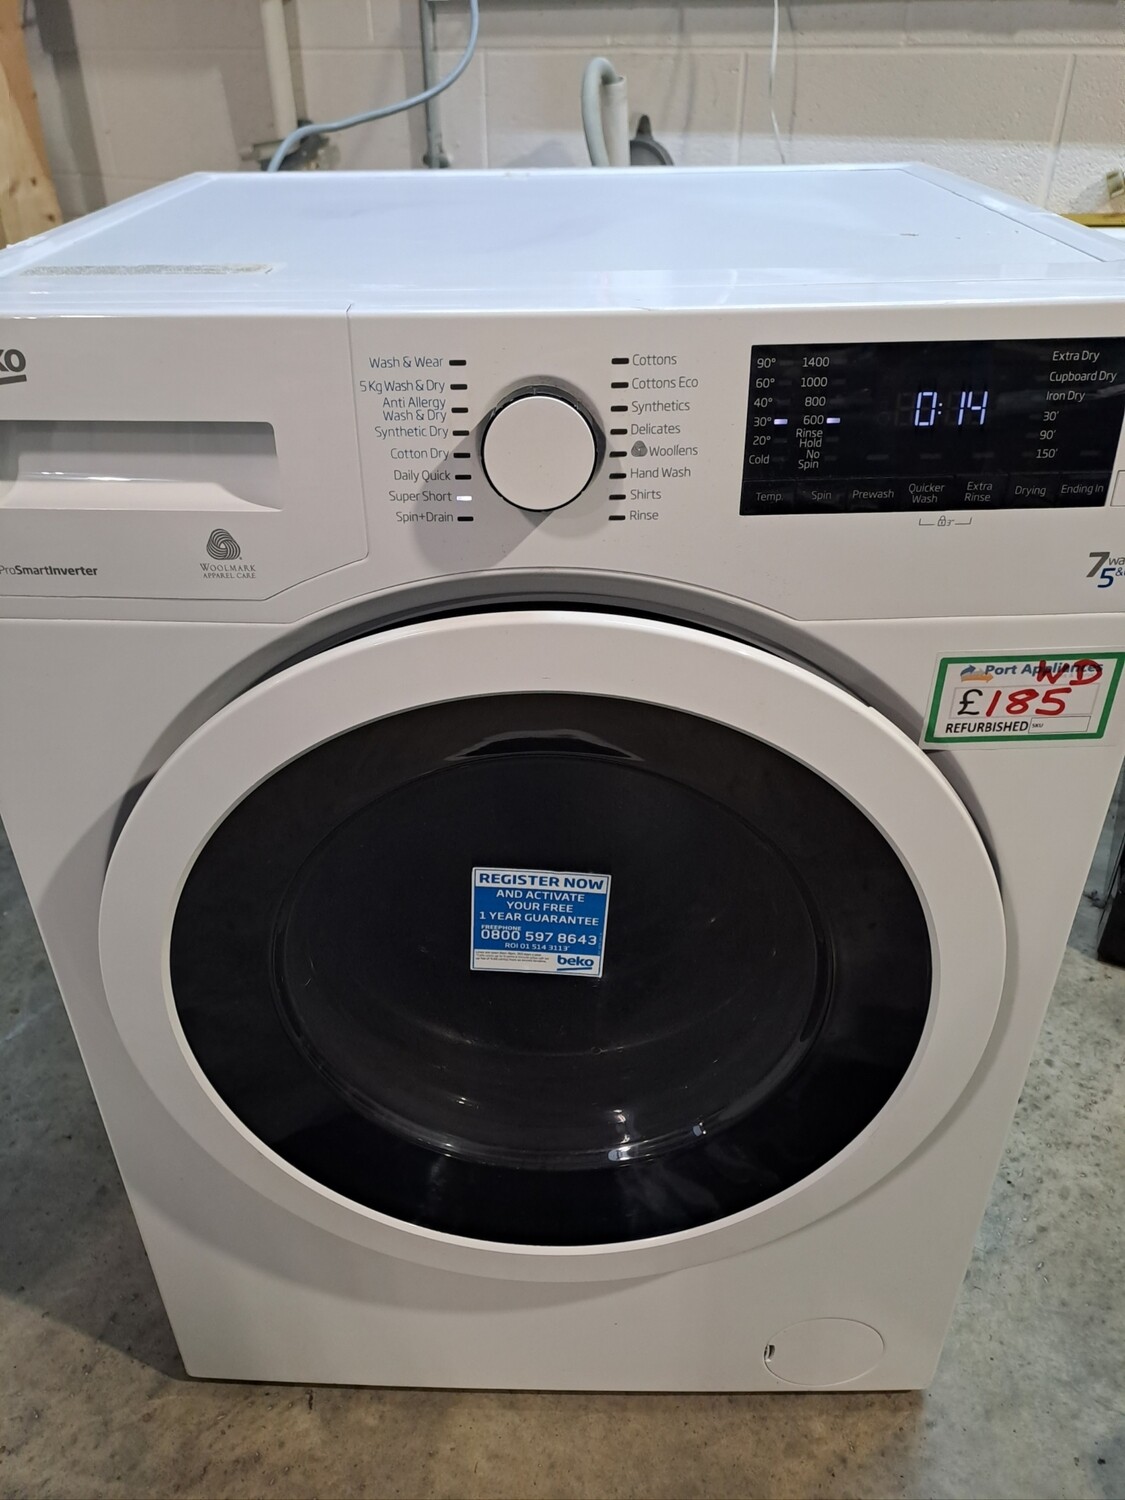 Beko WDJ7523023W 7kg Load 1400 Spin Washing Machine Washer Dryer - White - Refurbished - 6 Month Guarantee